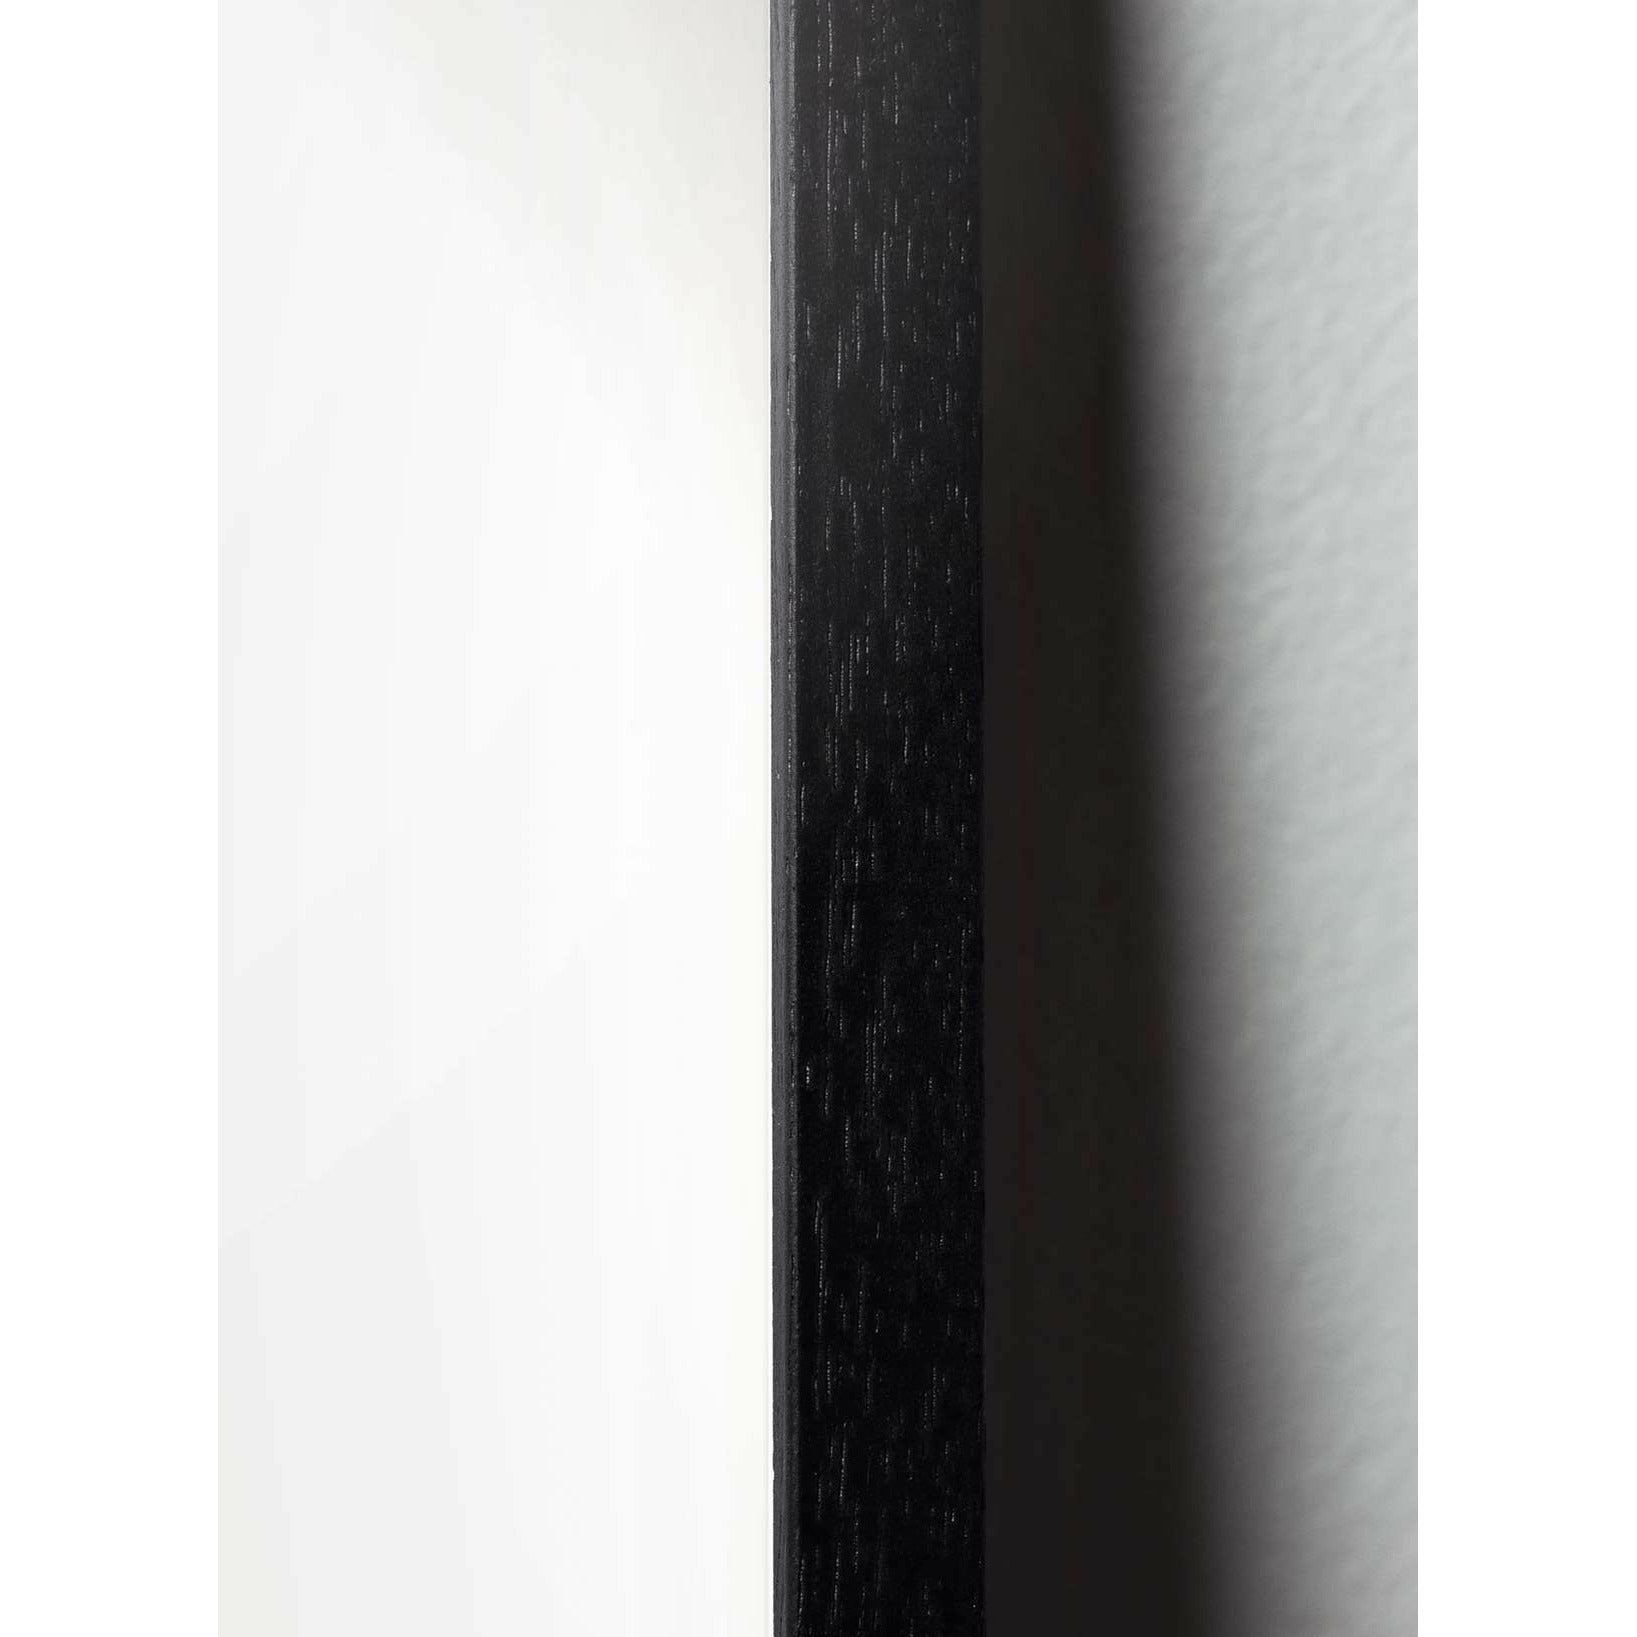 Póster Figuras de huevo de creación, marco hecho de madera lacada negra A5, marrón